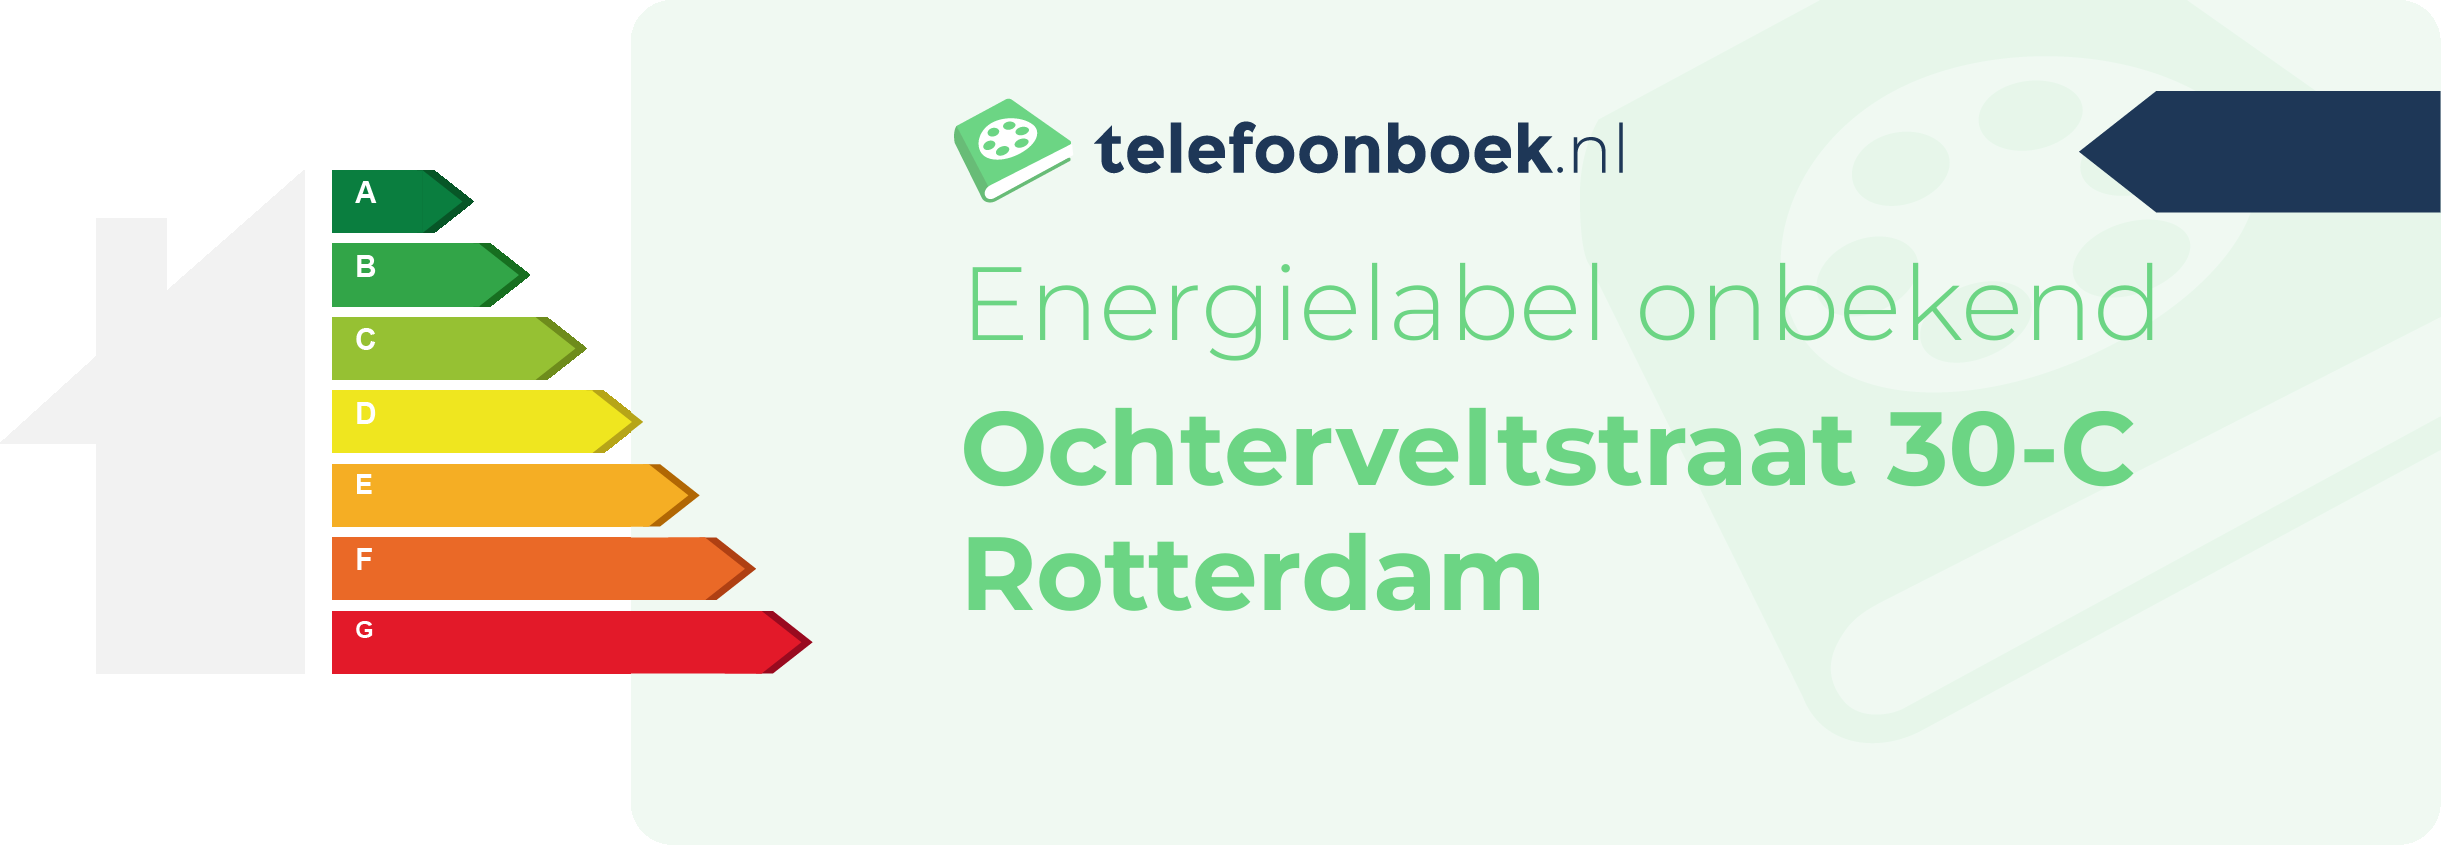 Energielabel Ochterveltstraat 30-C Rotterdam